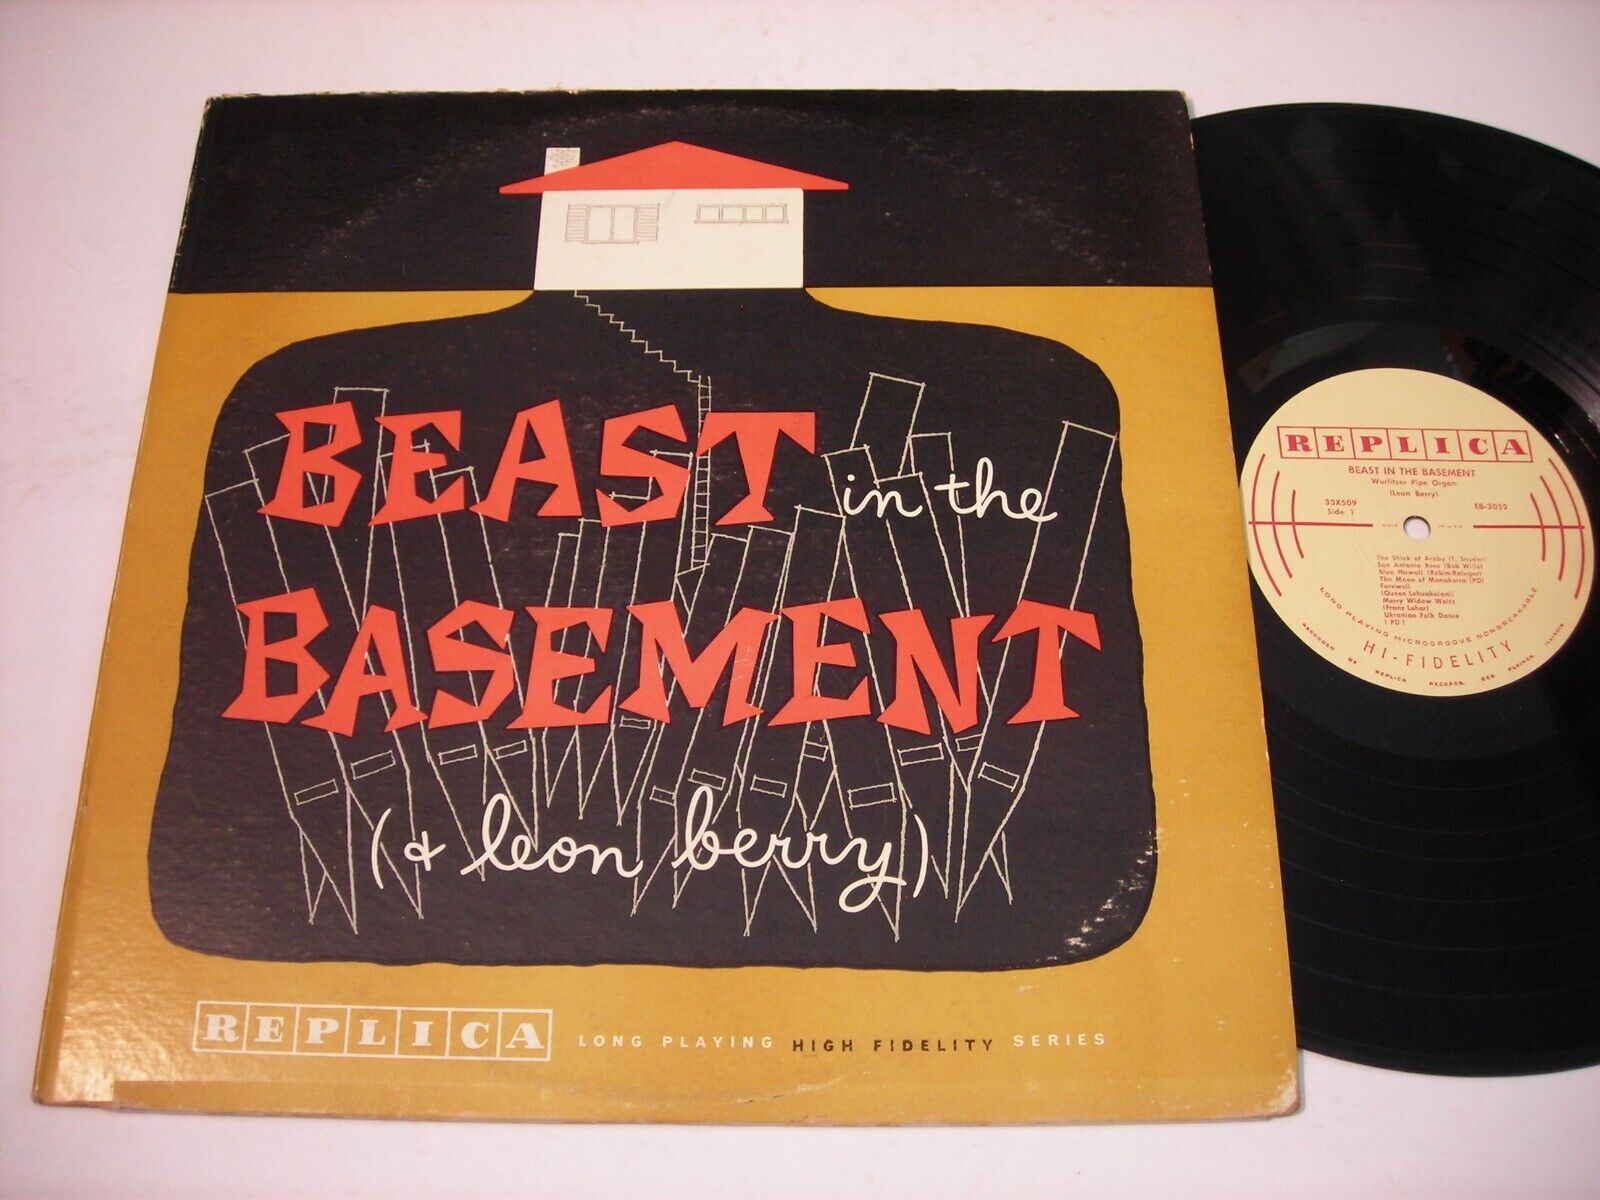 Leon Berry Beast in the Basement 1955 Mono LP VG++ w insert